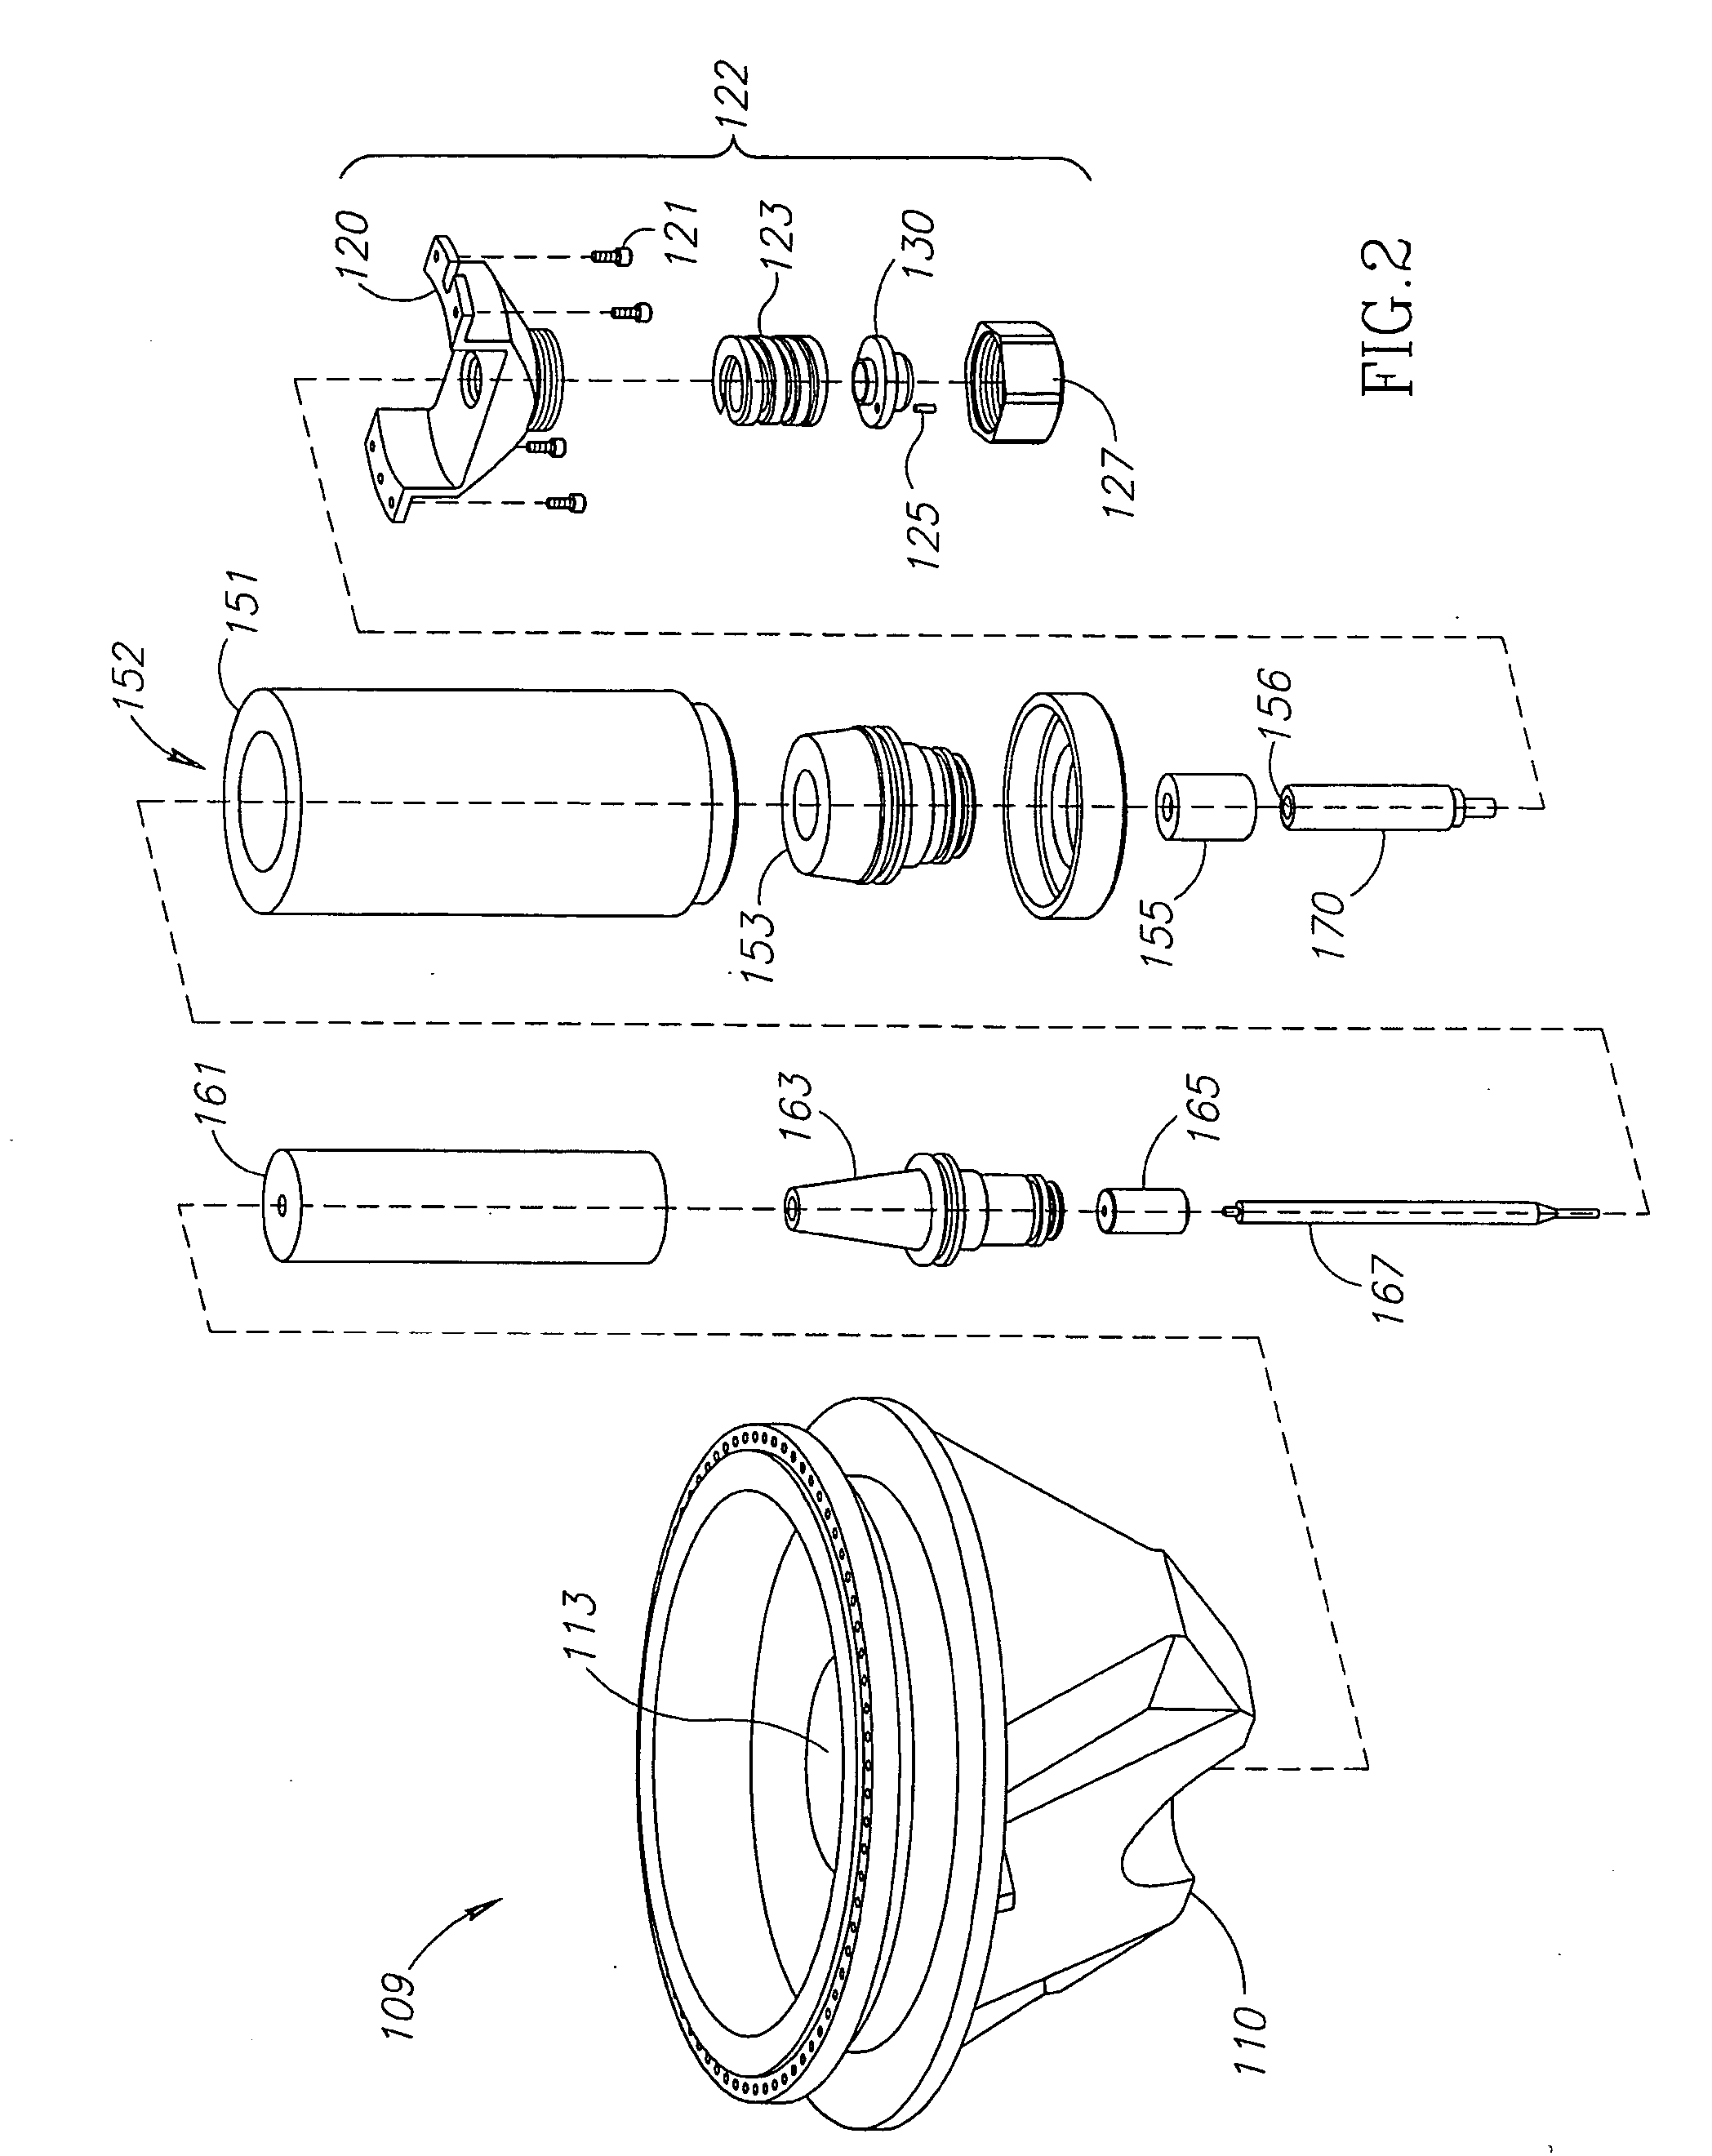 Pressure foot clamping apparatus and methods